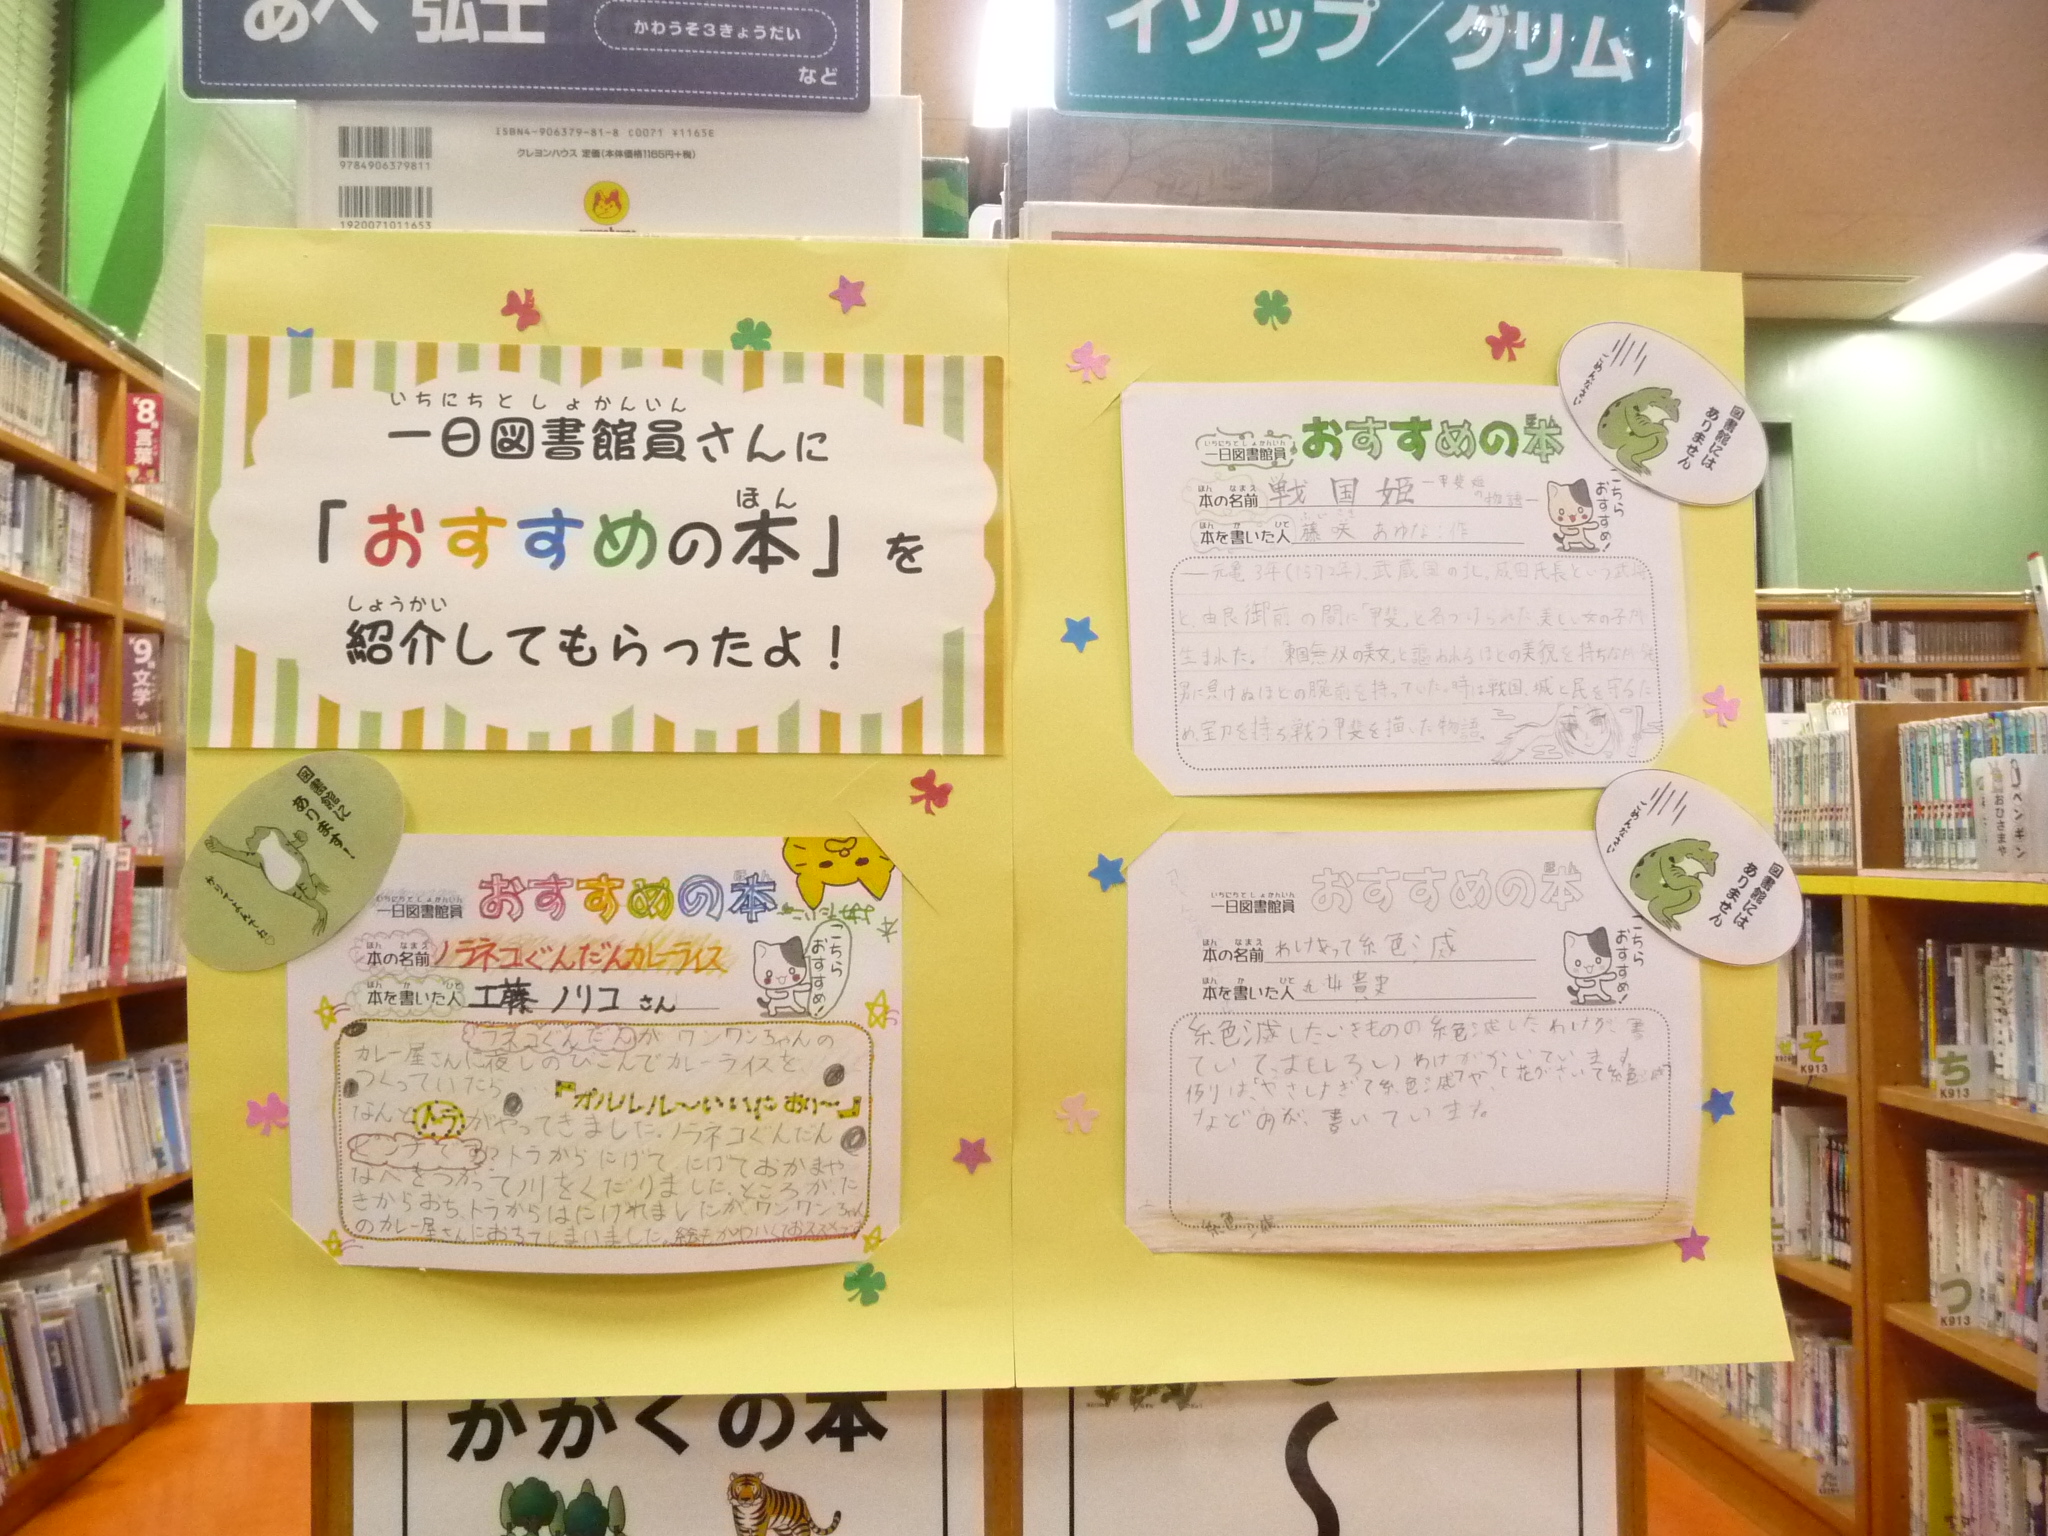 長井市立図書館 Nagai Library Twitter